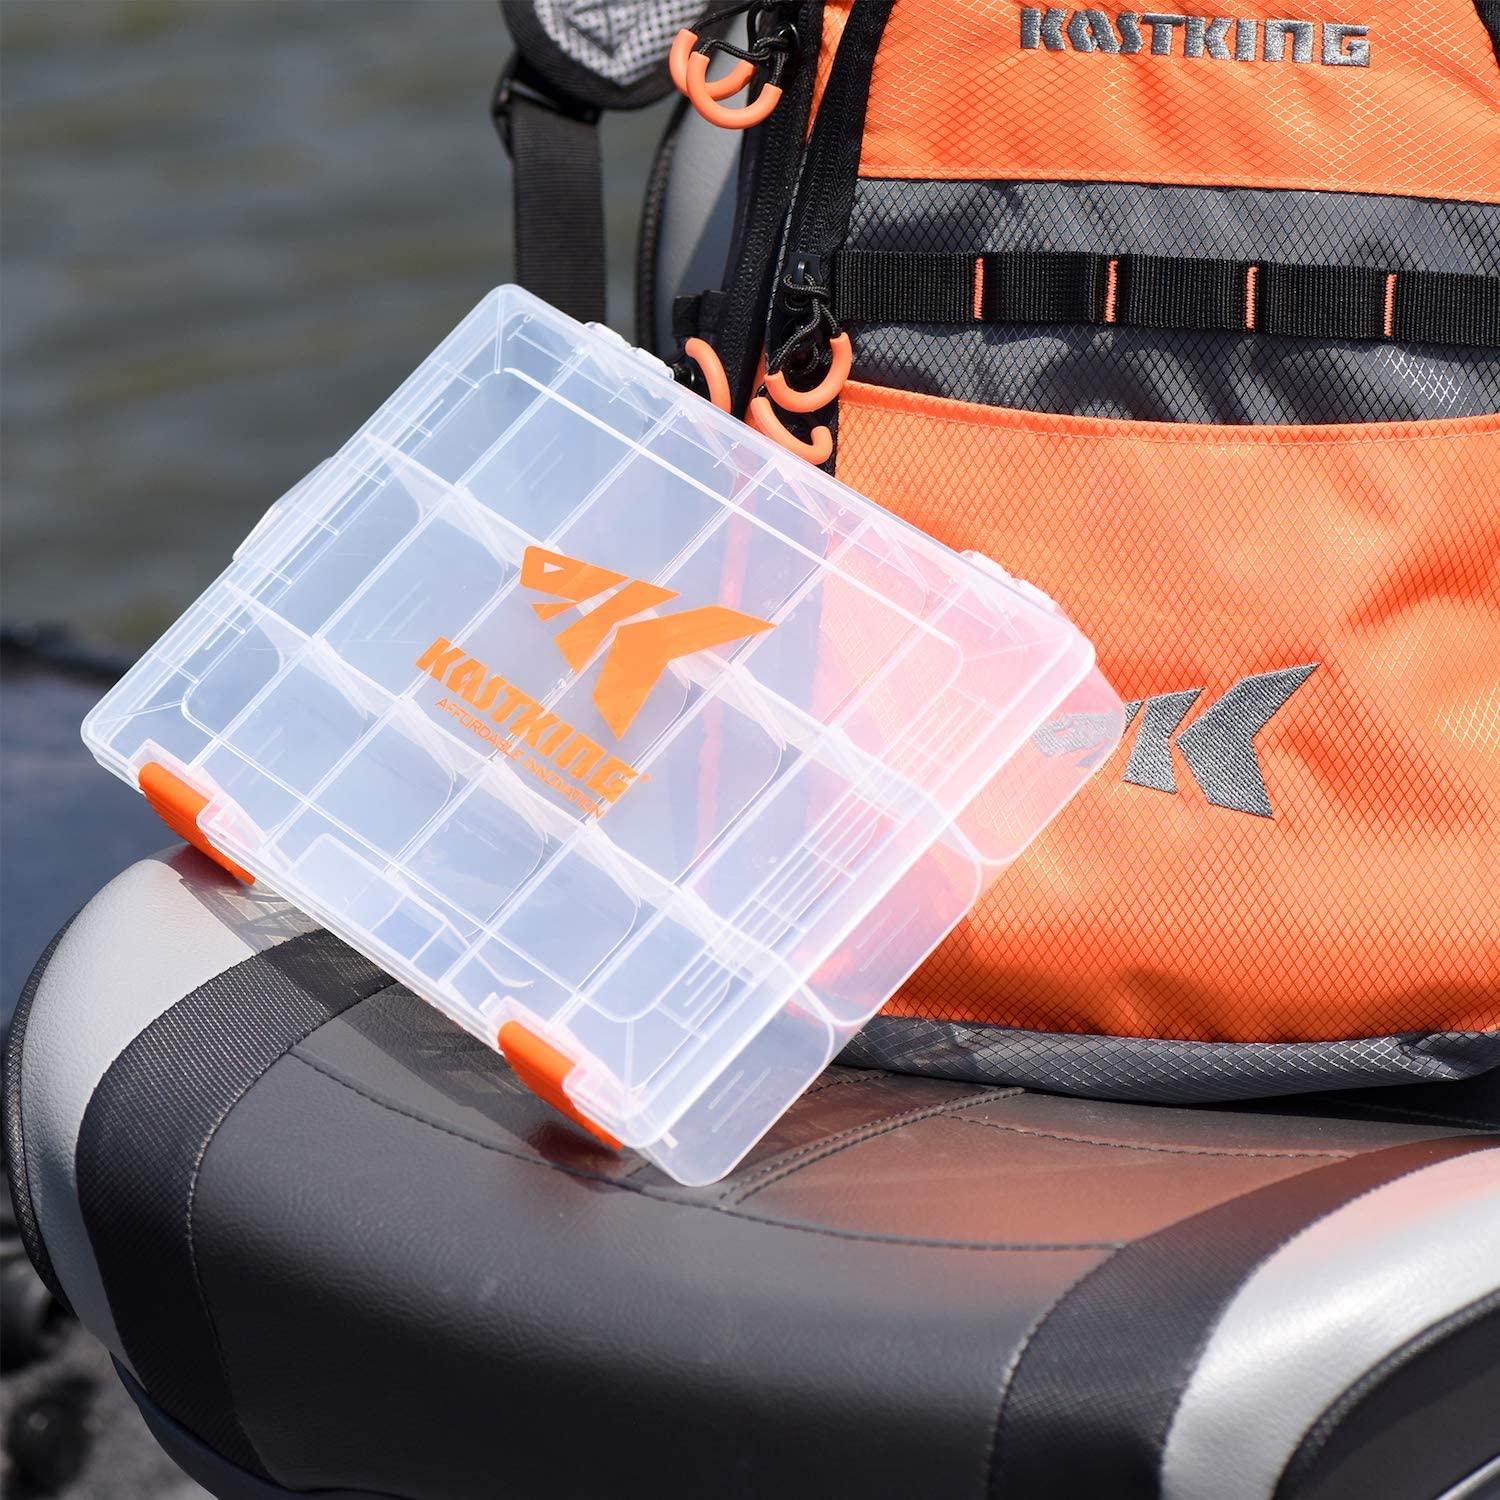 KastKing Fishing Tackle Bags, Fishing Gear Bag, Saltwater Resistant Tackle Bag,Extra-large Hawg